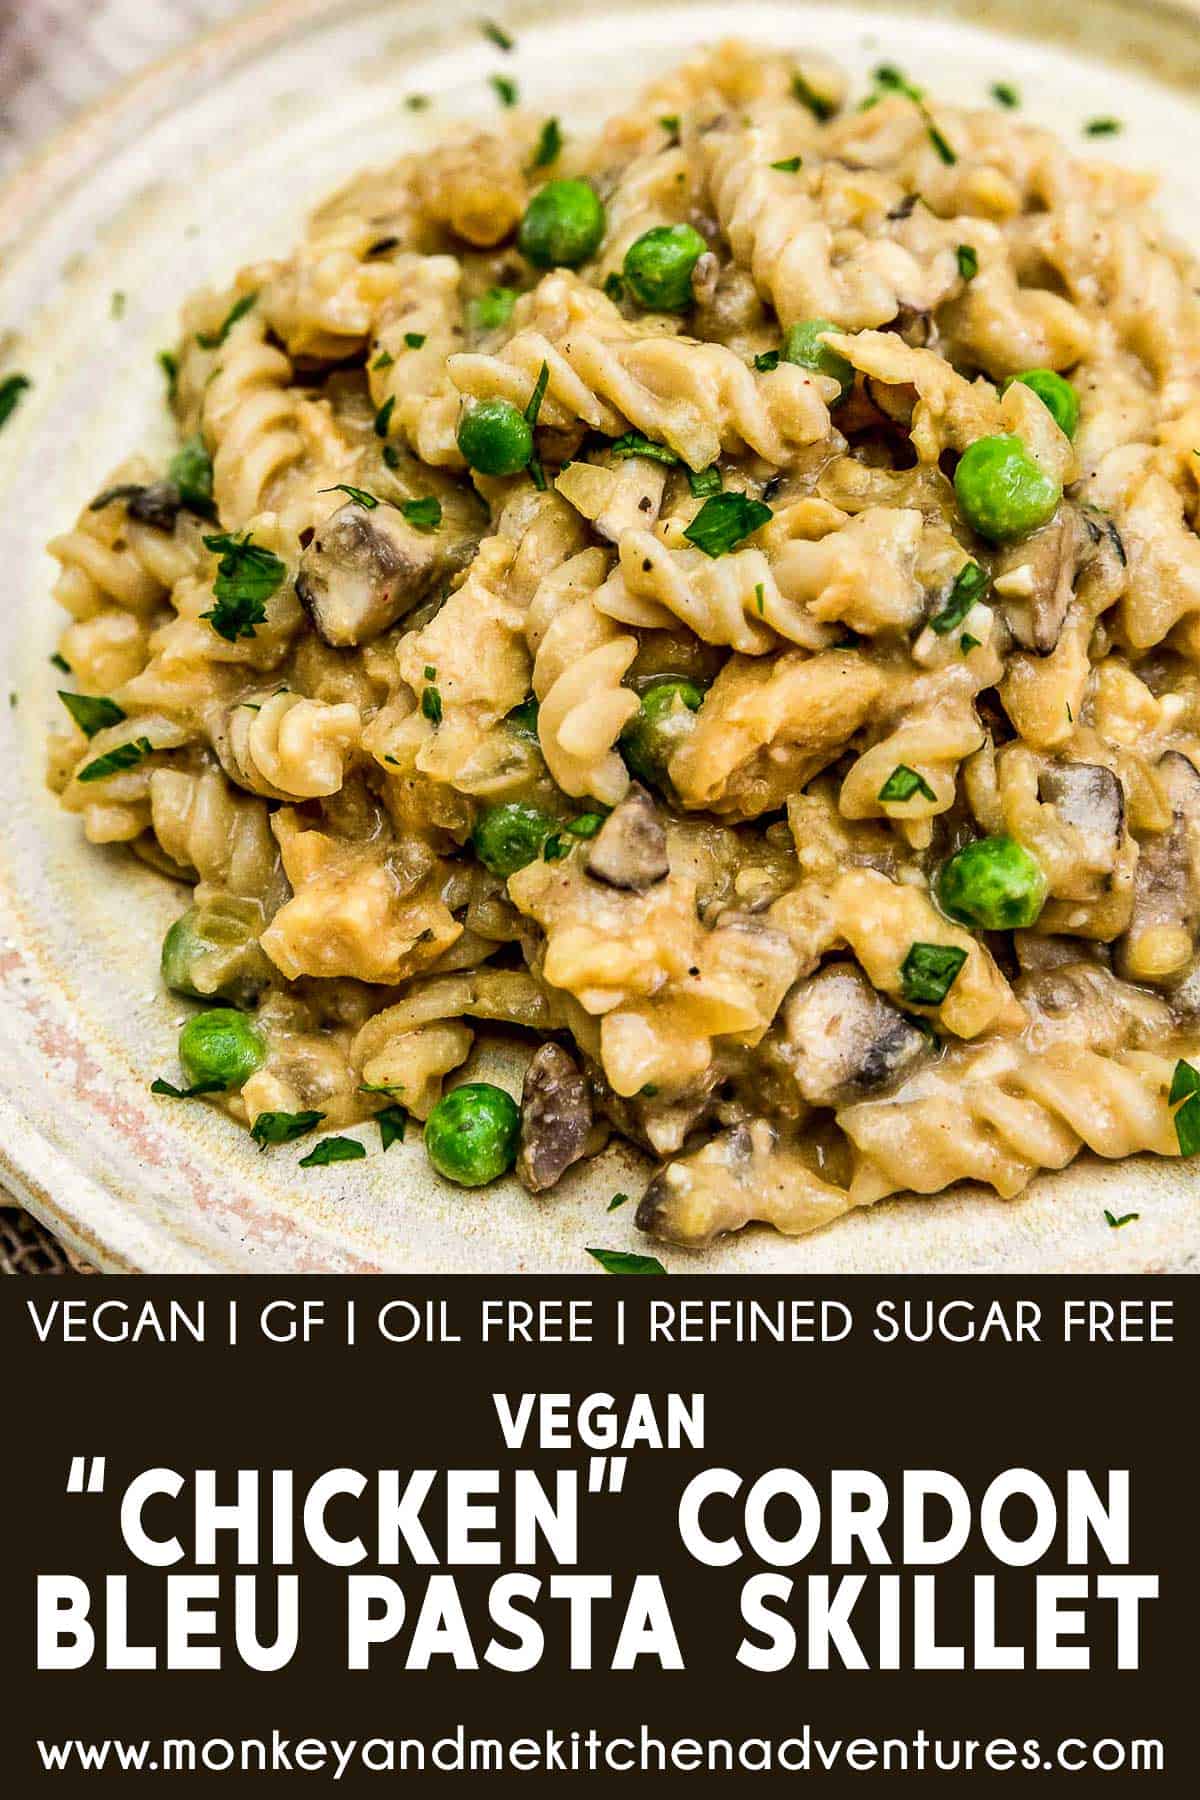 Vegan “Chicken” Cordon Bleu Pasta Skillet with text description